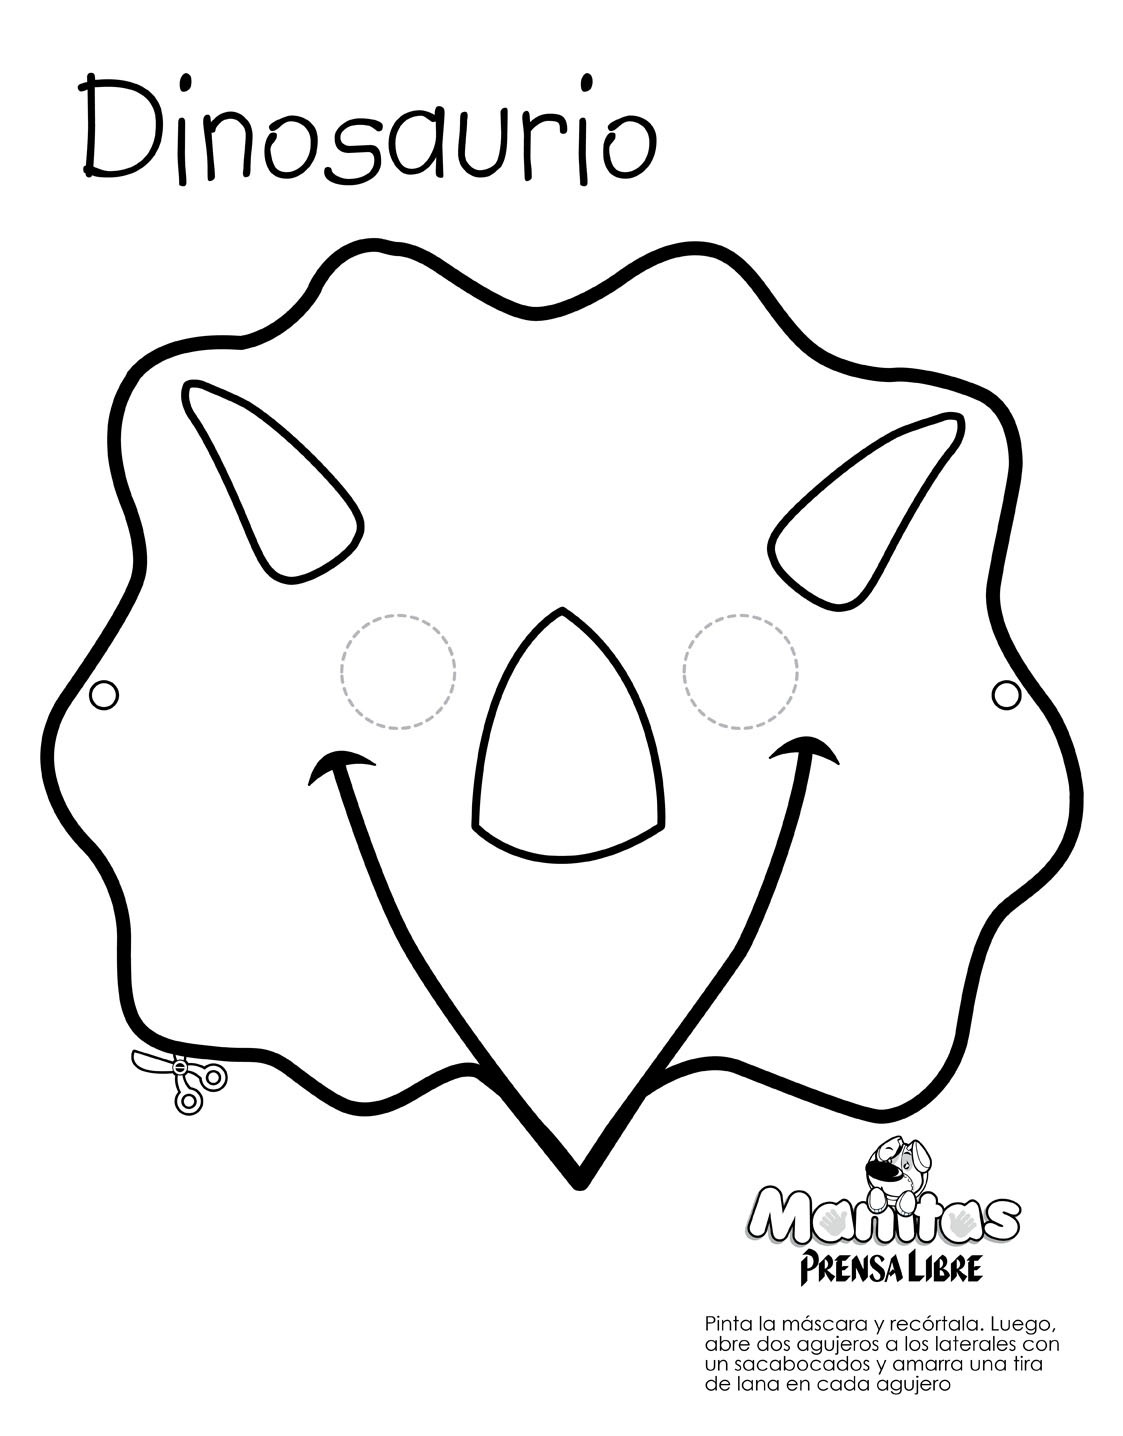 [dinosaurios32.jpg]